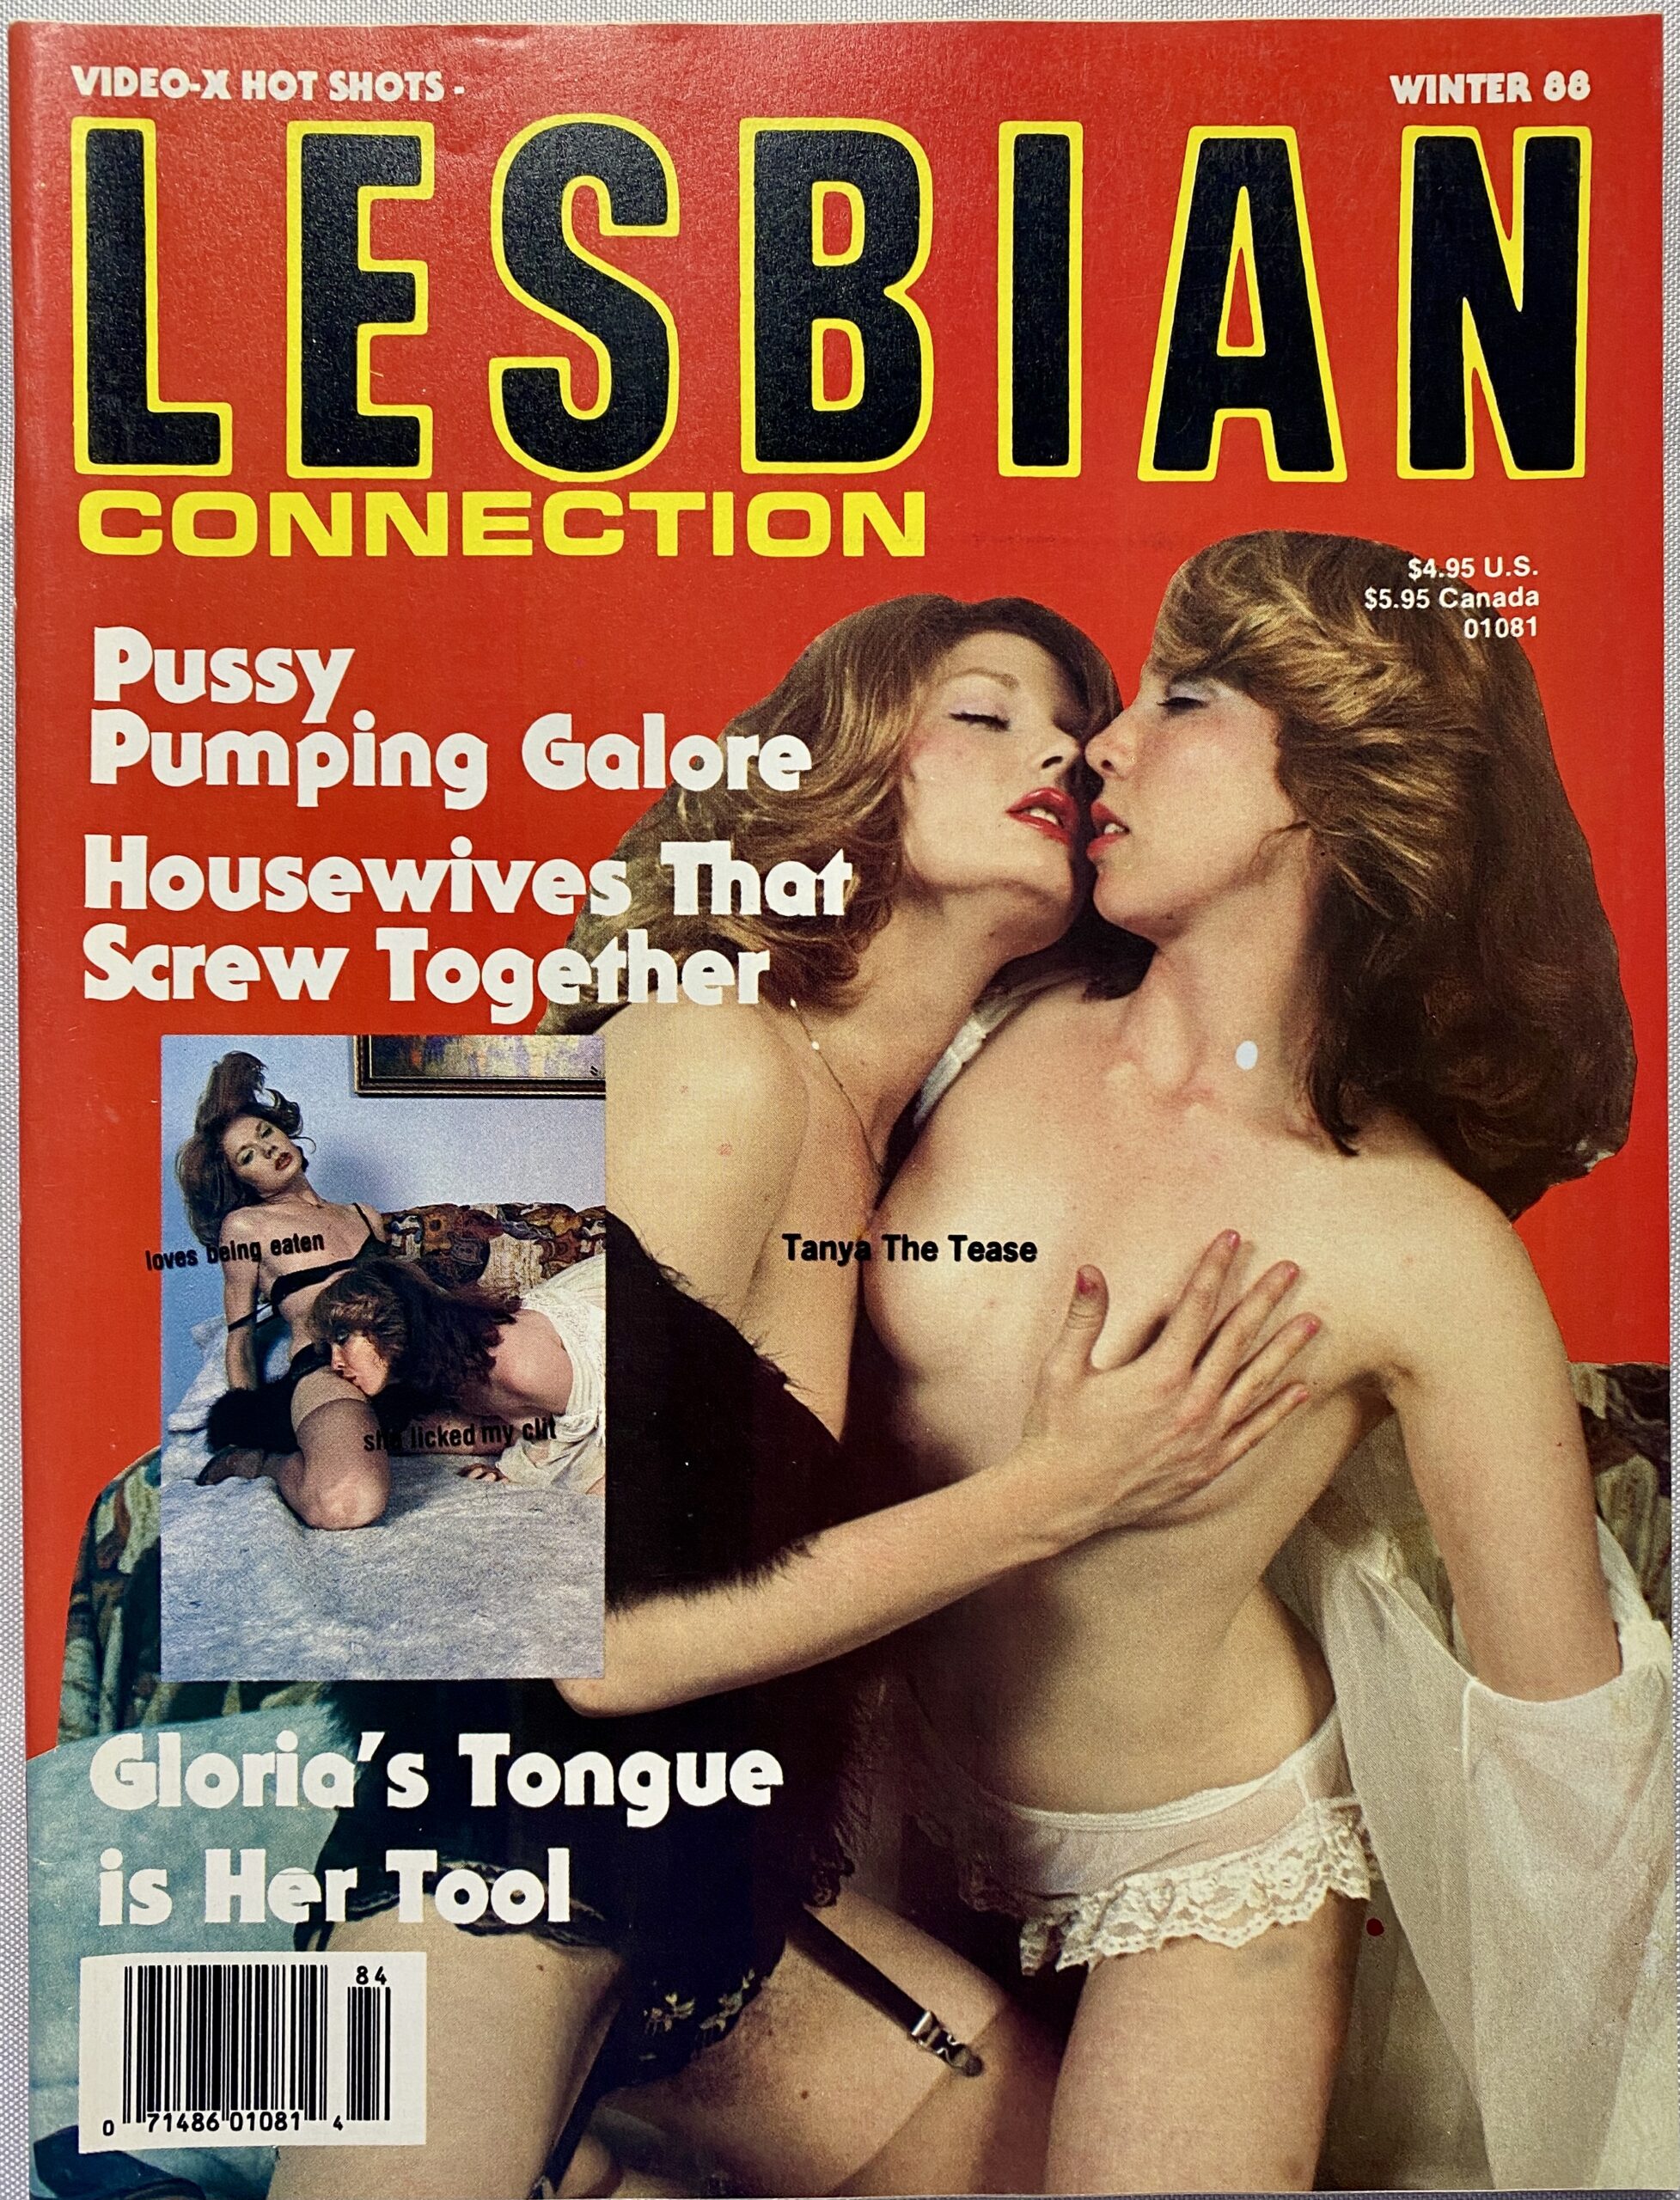 Video-X Hot Shots Lesbian Connection Winter 1986 Adult Magazine - Vintage  Magazines 16